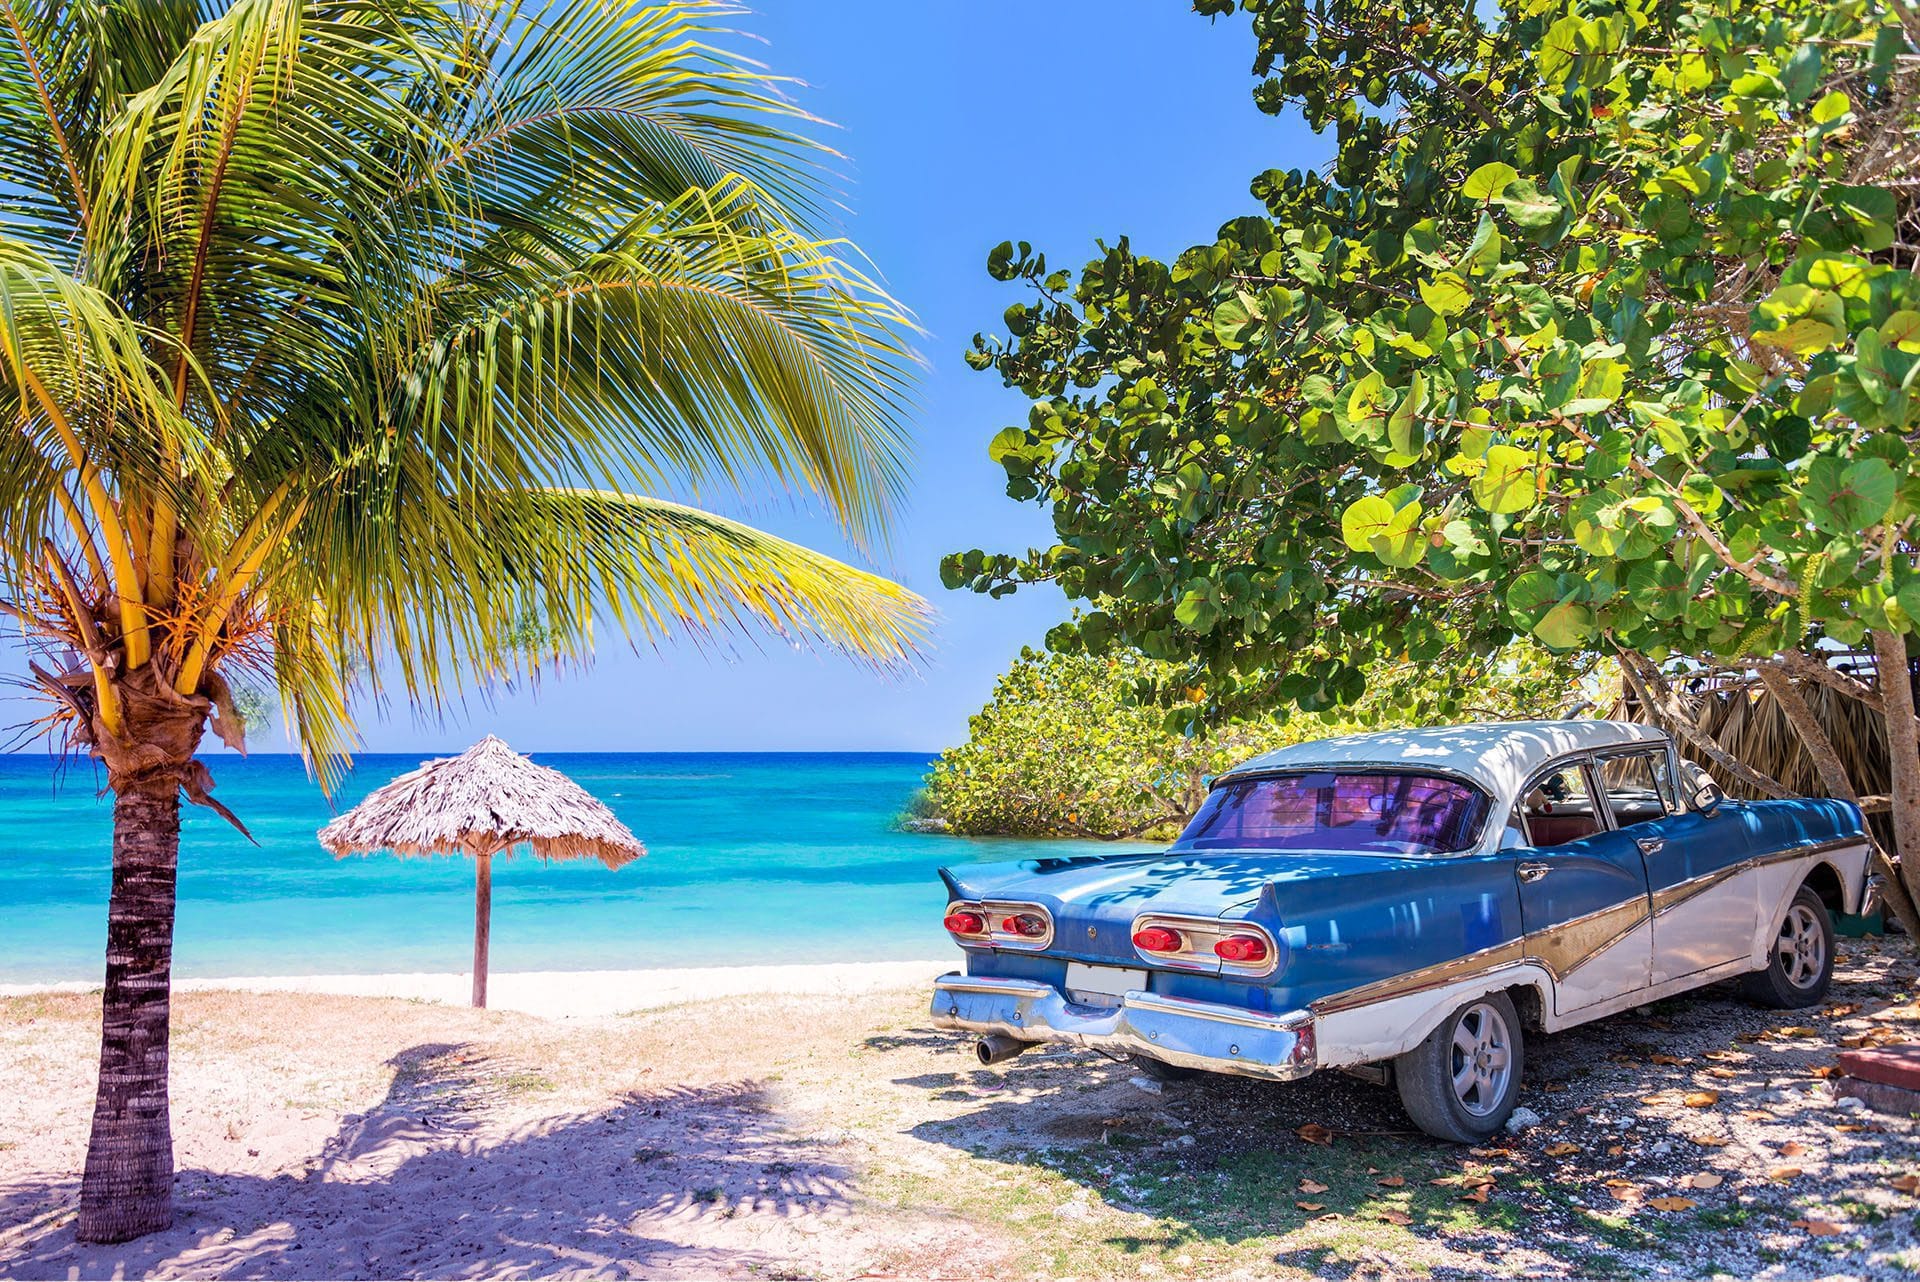 Les plus belles destinations vacances de Cuba